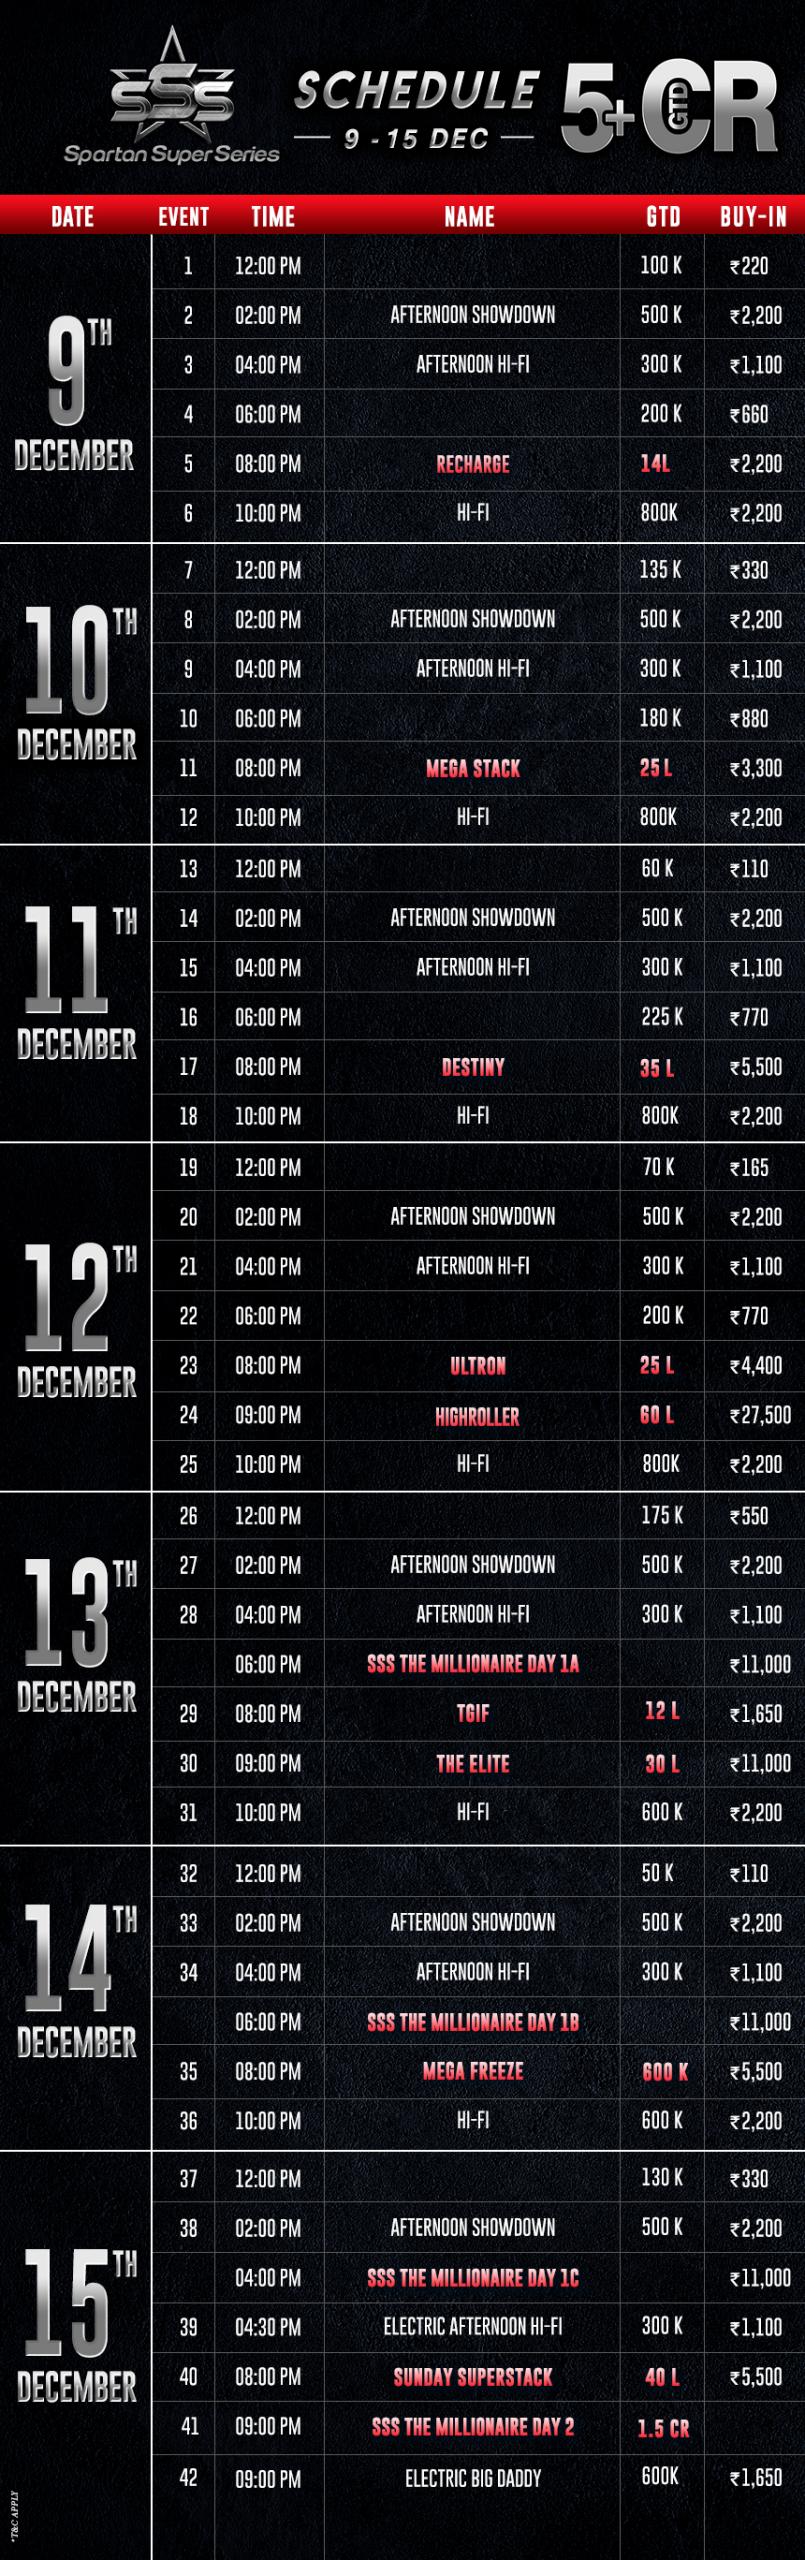 schedule of the Spartan Super Series